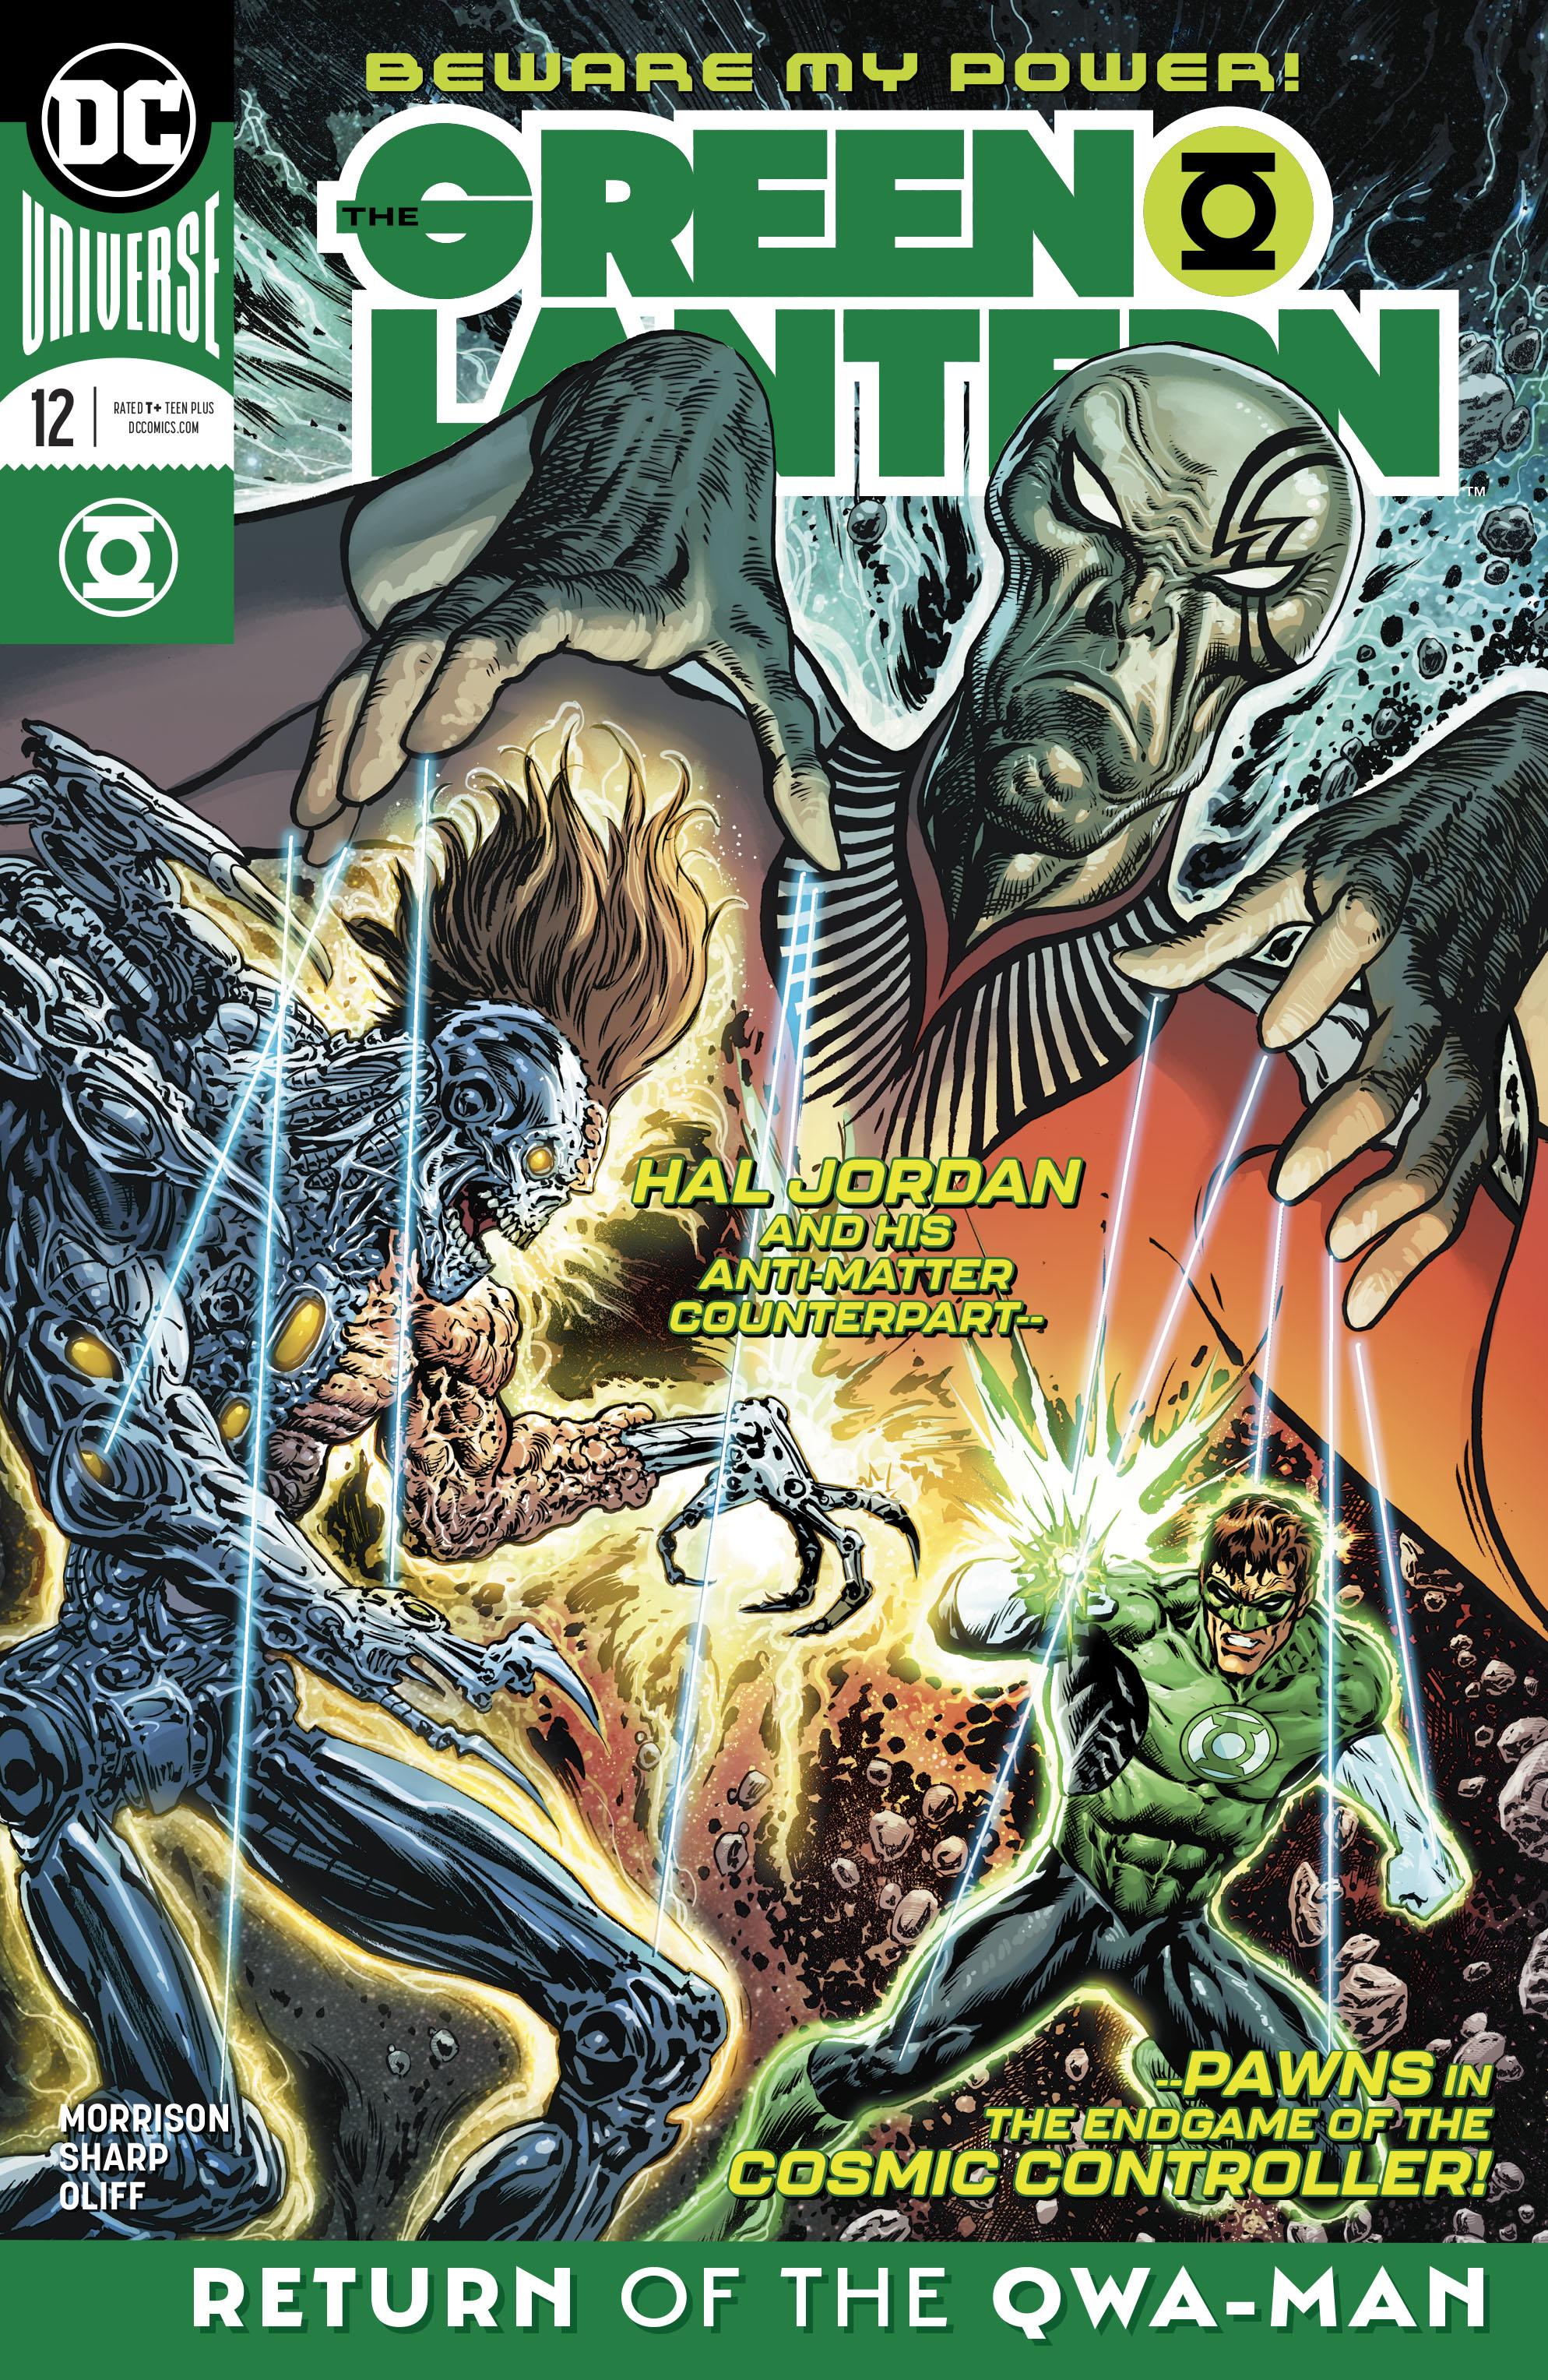 The Green Lantern Vol. 1 #12